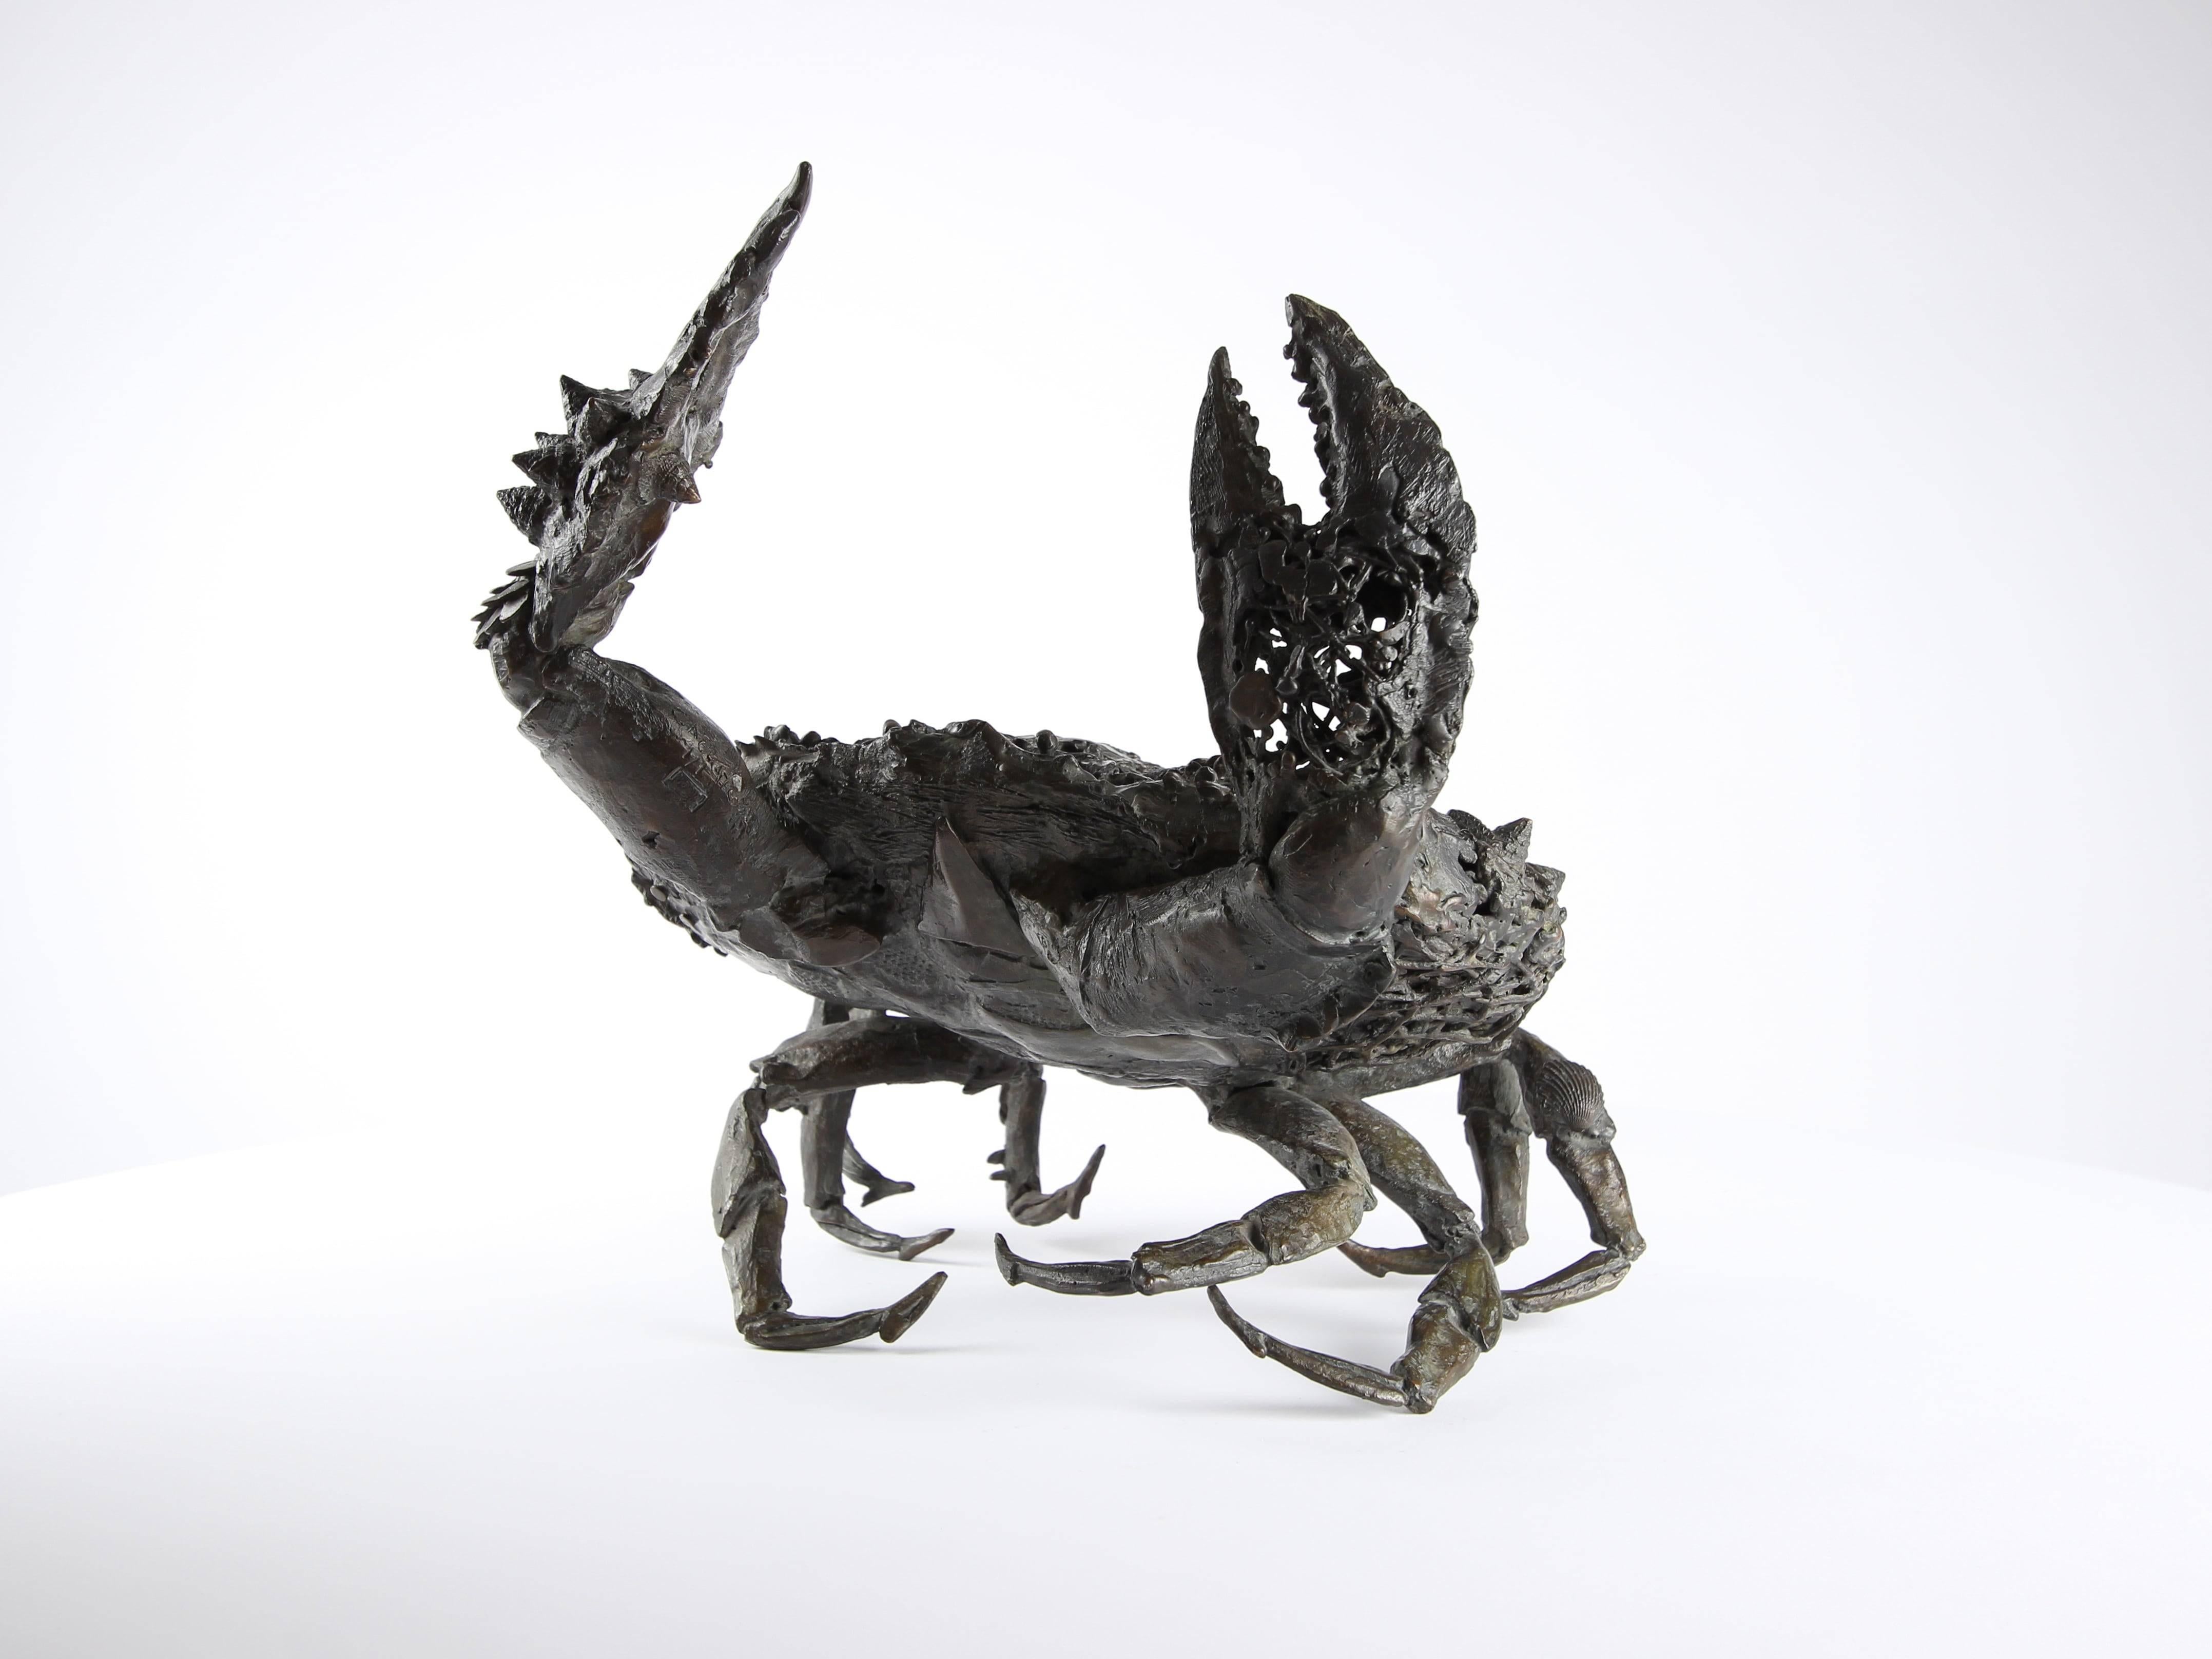 Crabe aux pattelas by Chésade - Bronze sealife sculpture, animal art, crab For Sale 2